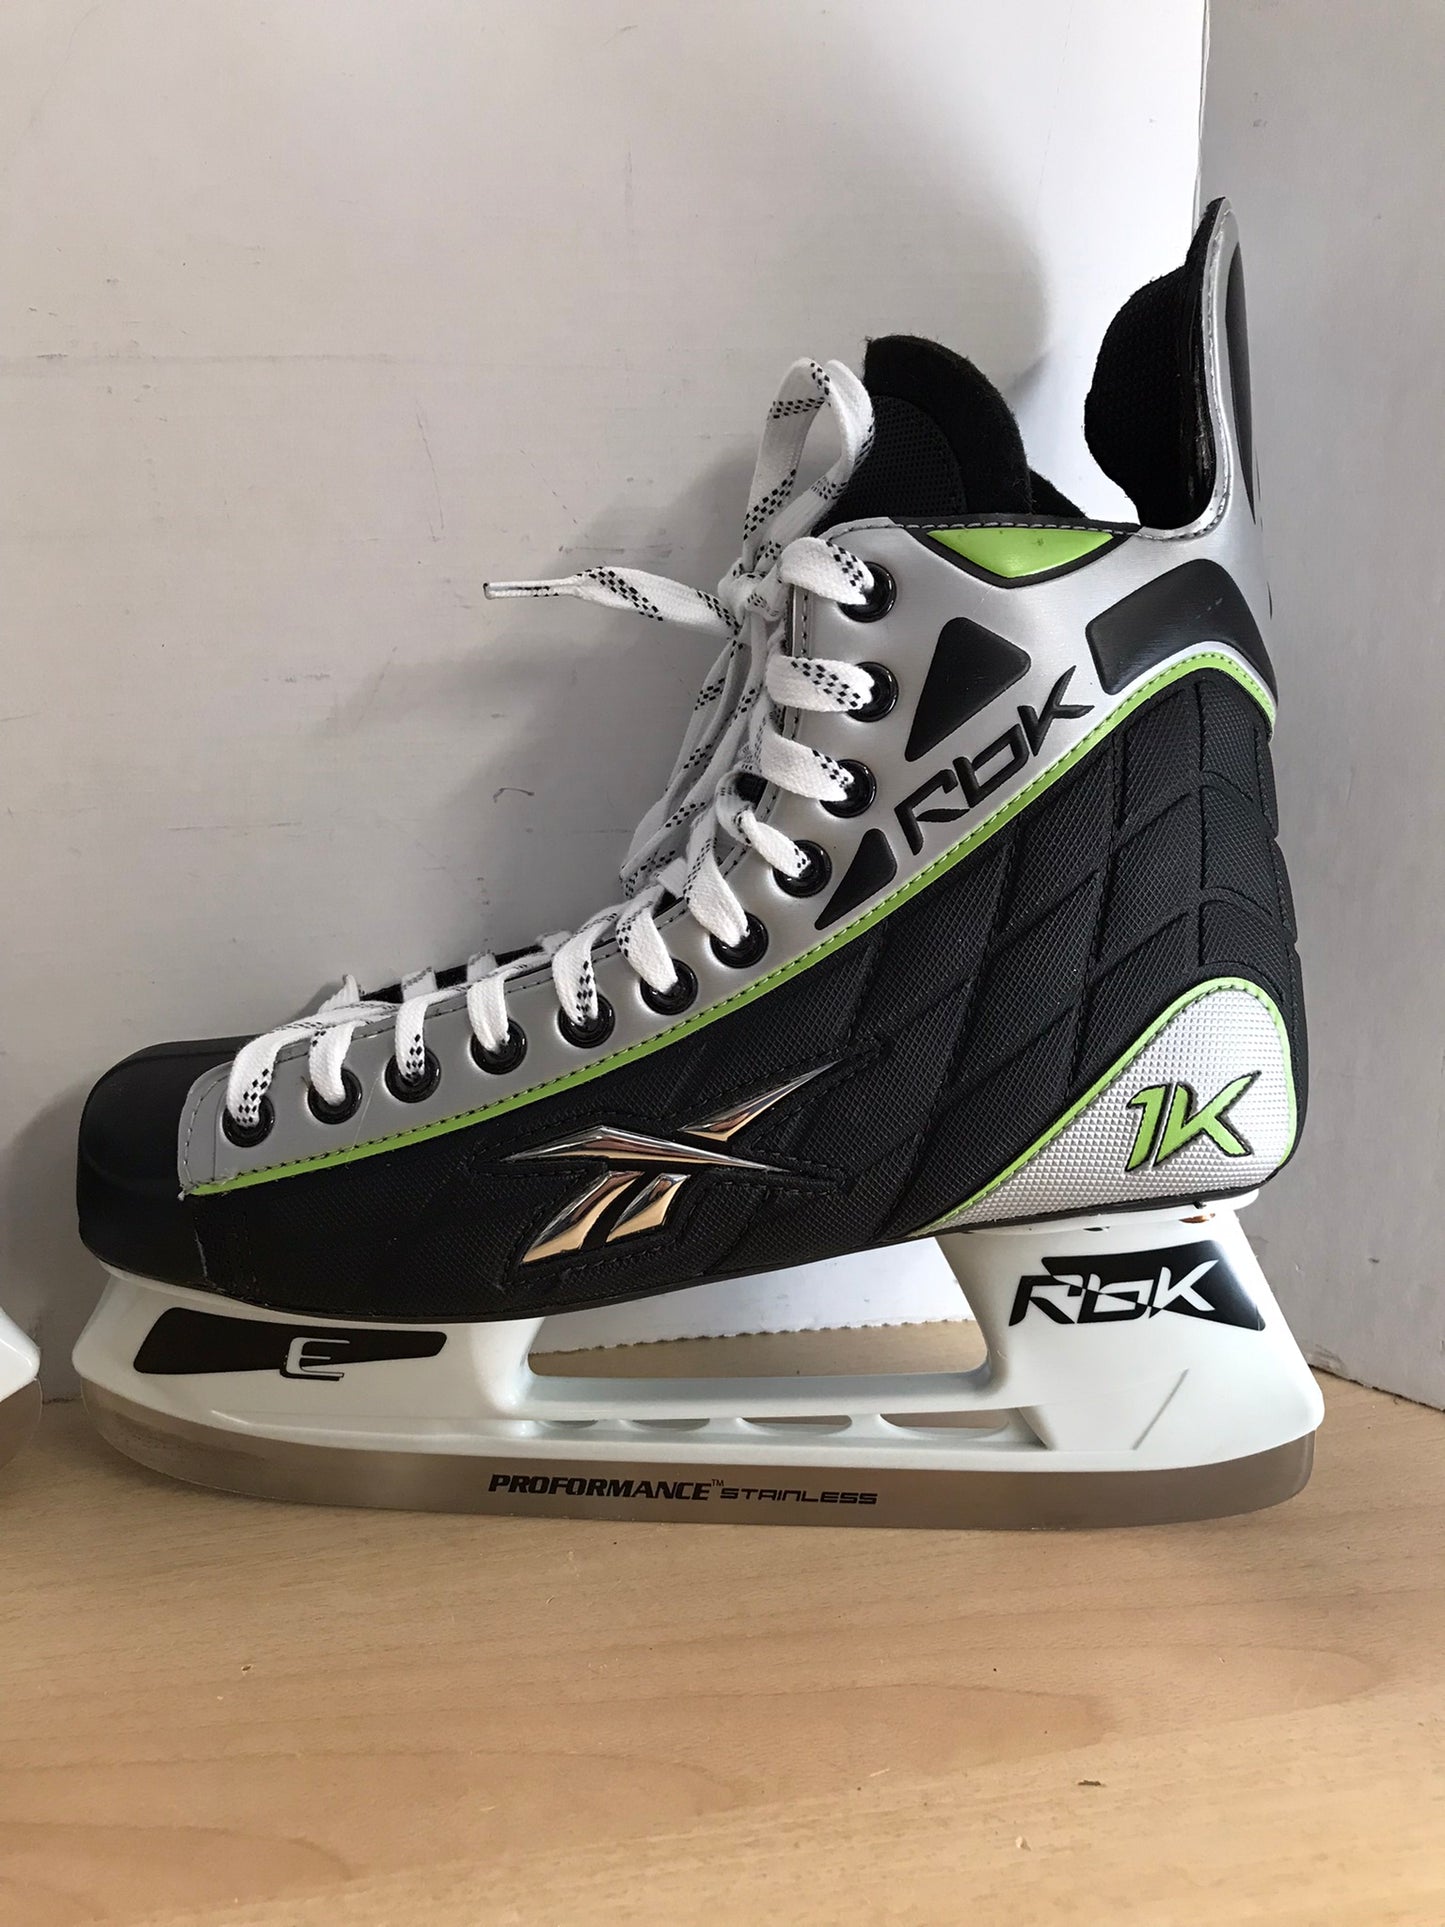 Hockey Skates Men's Size 11 Shoe Size RBK New Demo Model